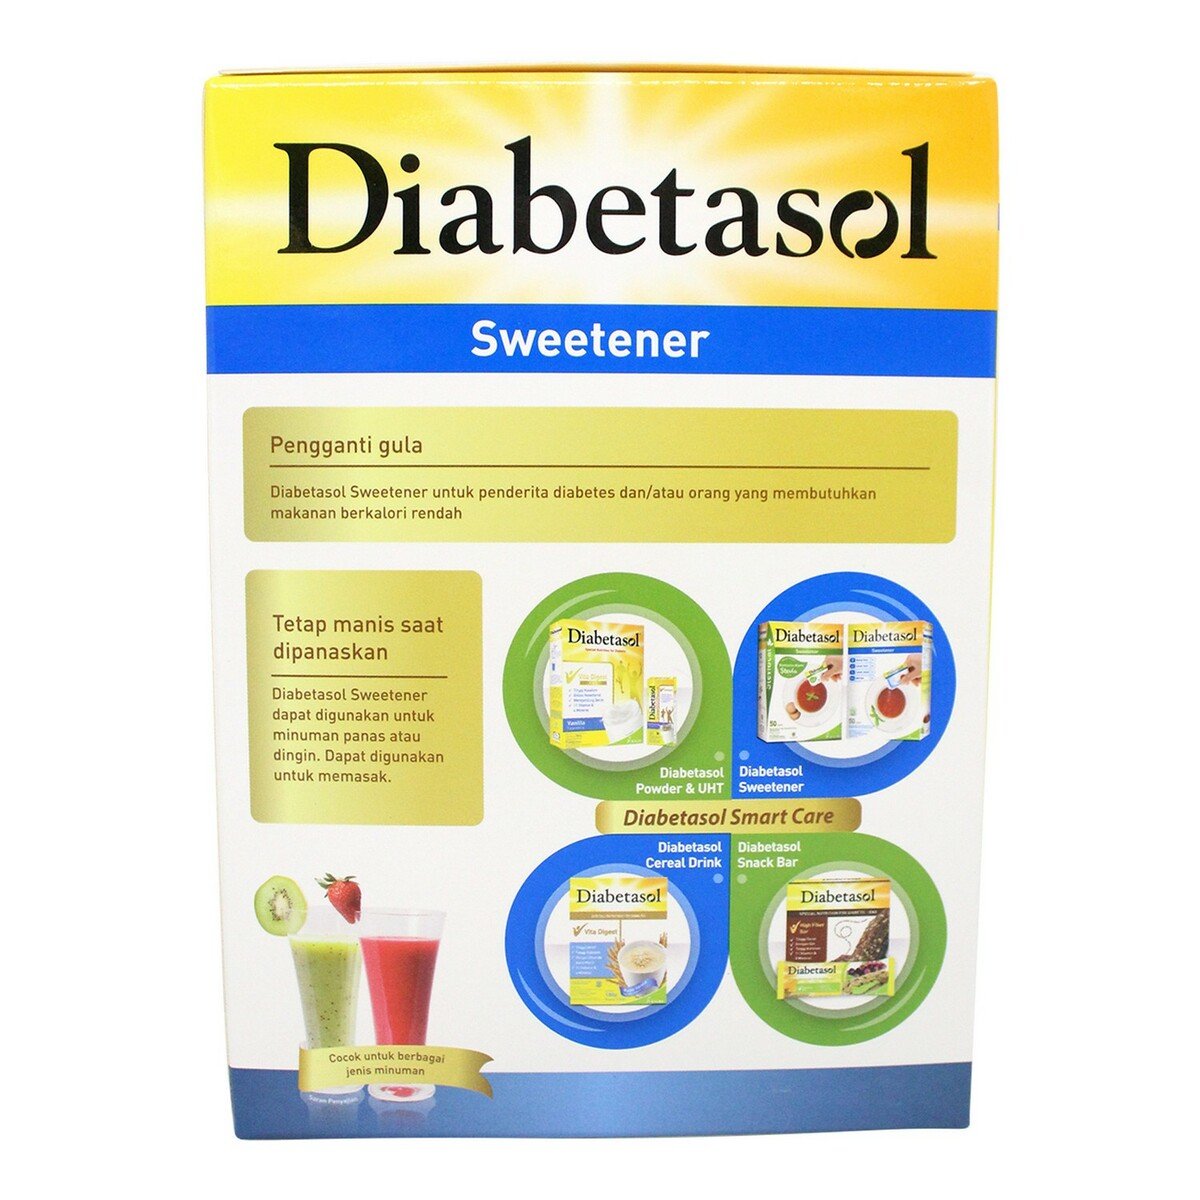 Diabetasol Sweetener 100 x 1g